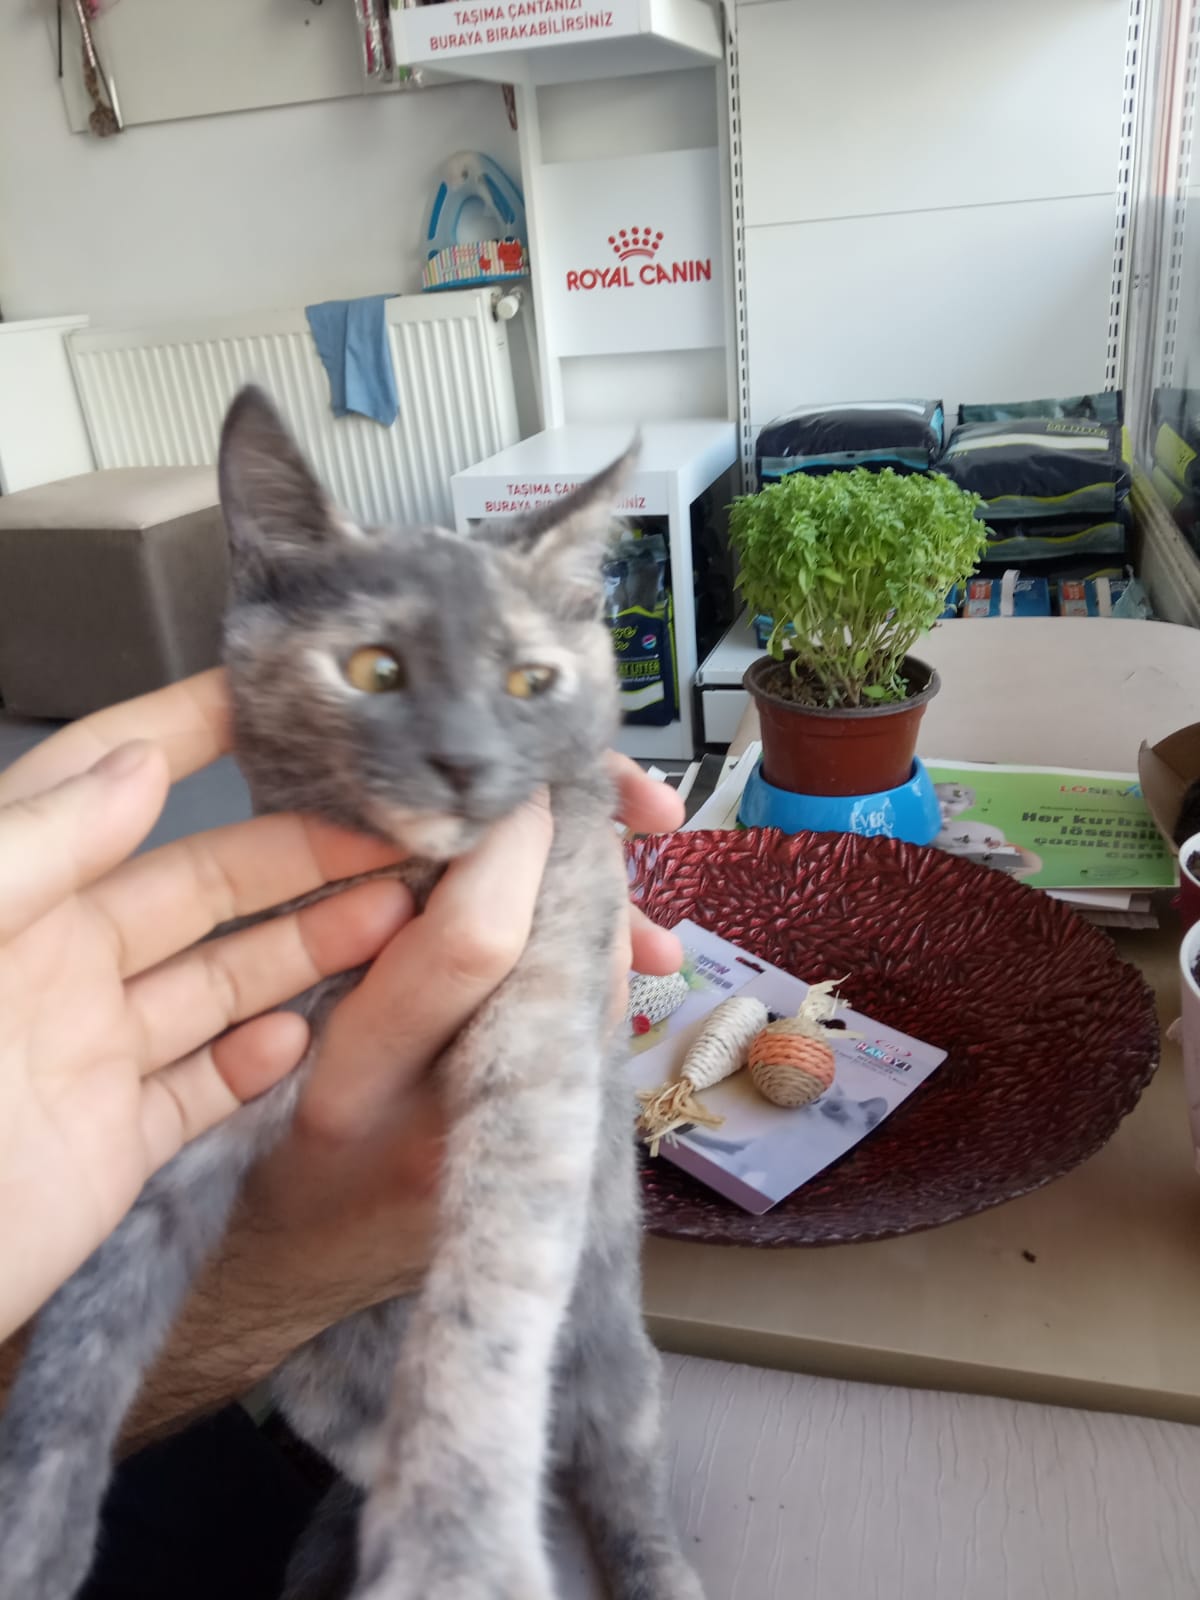 3 aylik kaliko disi kedi yu, Ücretsiz Kedi, Ankara